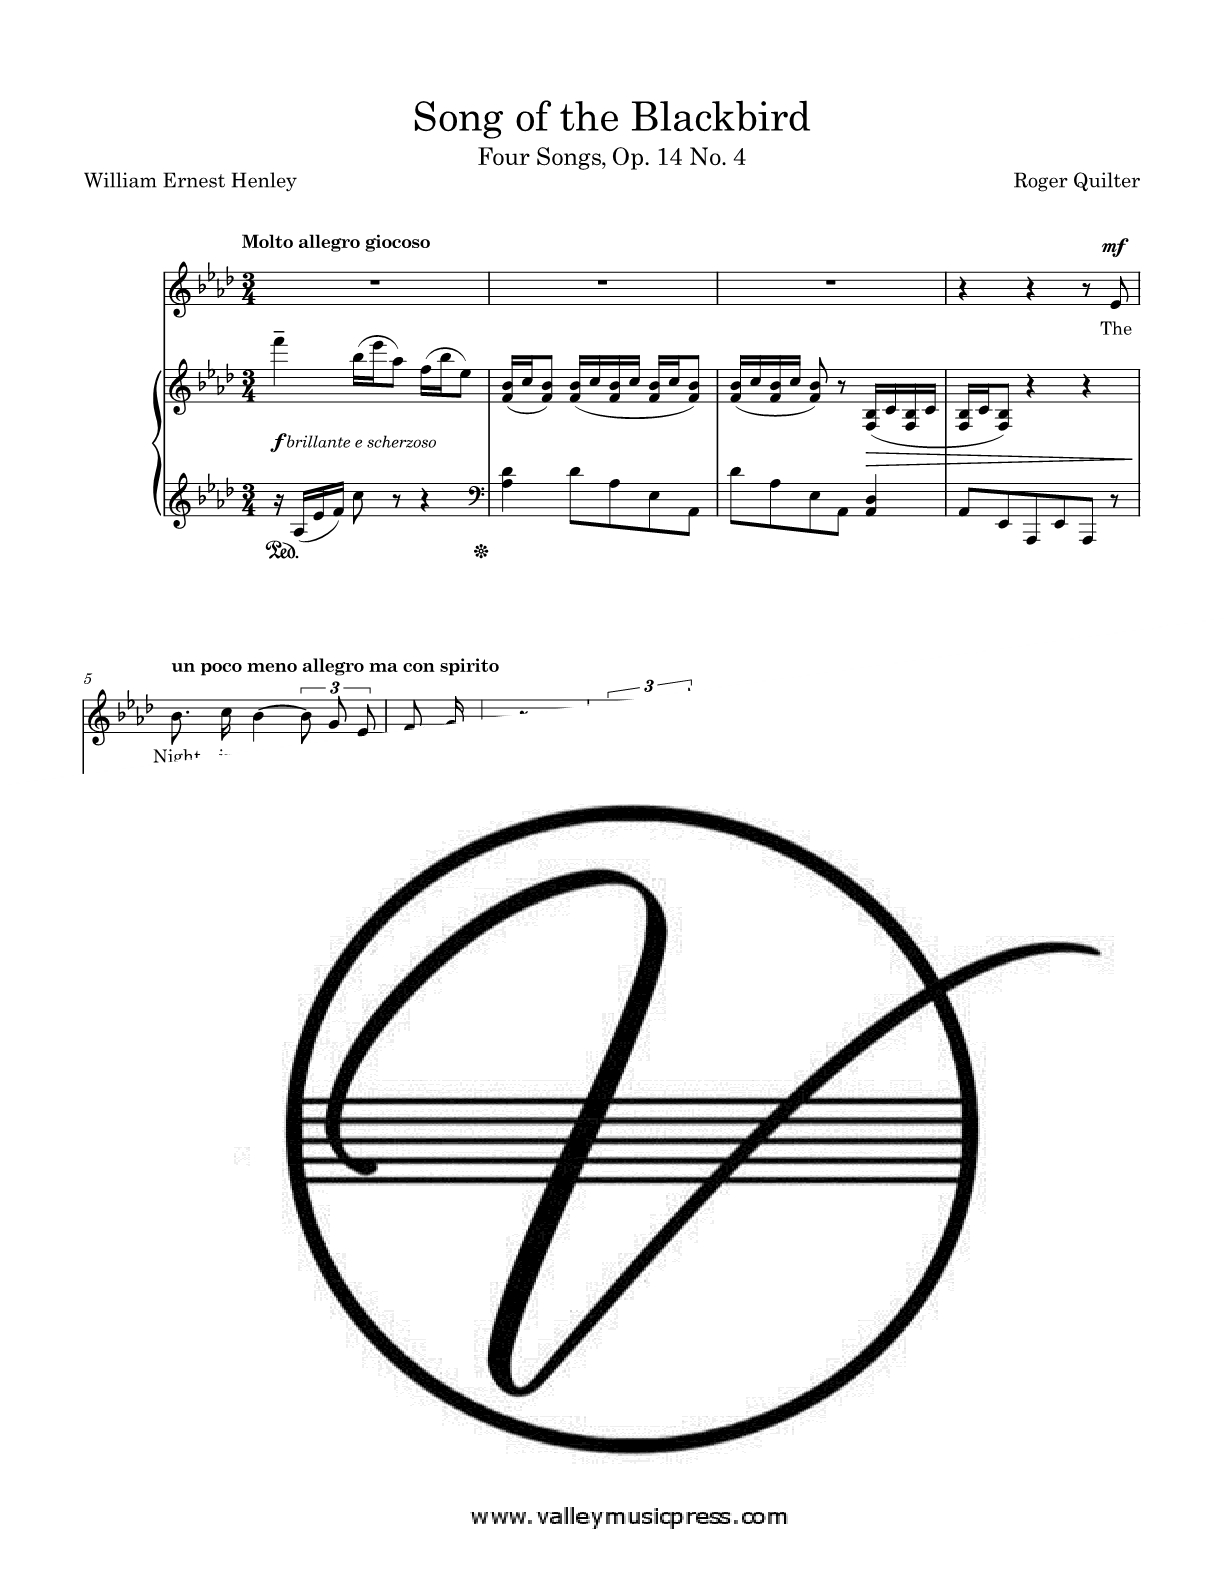 Quilter - Song of the Blackbird Op. 14 No. 4 (Voice)